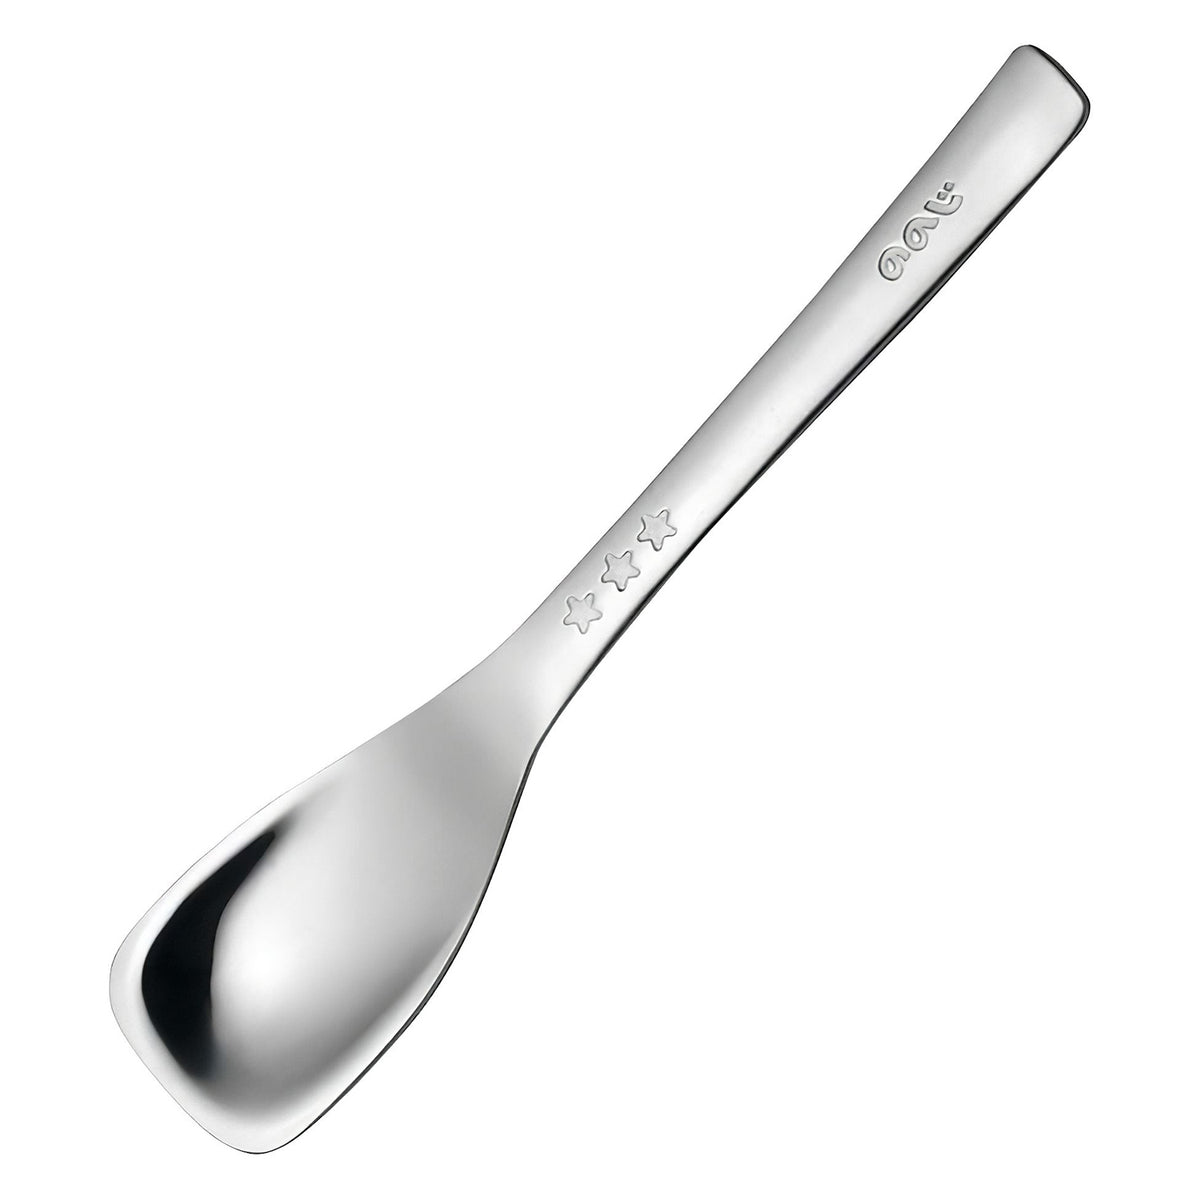 Nonoji Stainless Steel Spoon